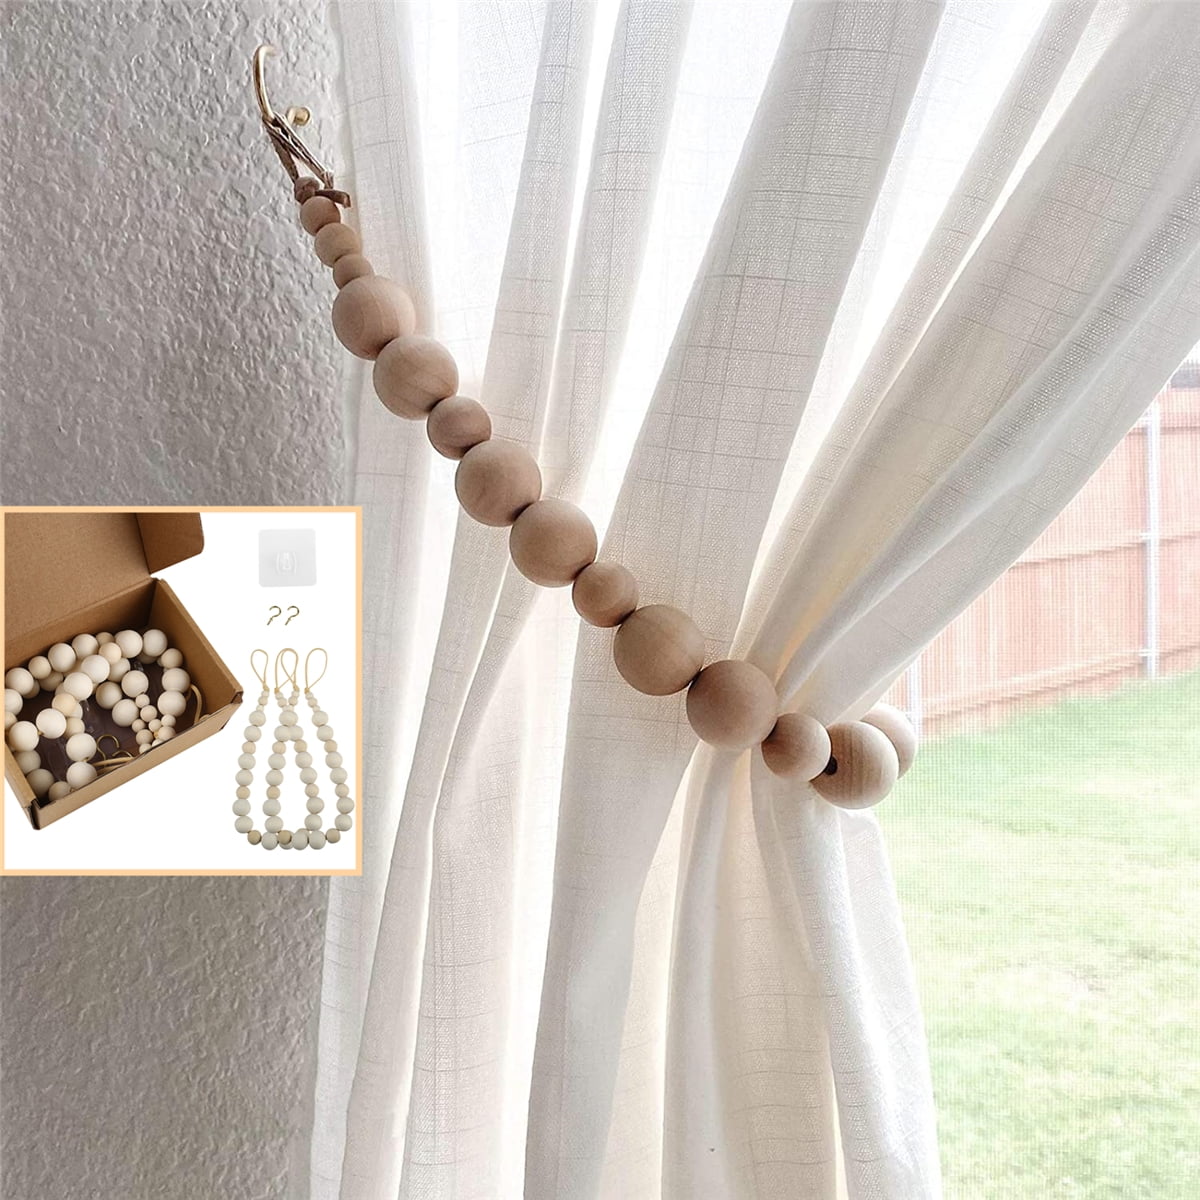 1 Pair Of Curtain Holdbacks Rope Tie Backs Tassel Tiebacks Window Decor New 